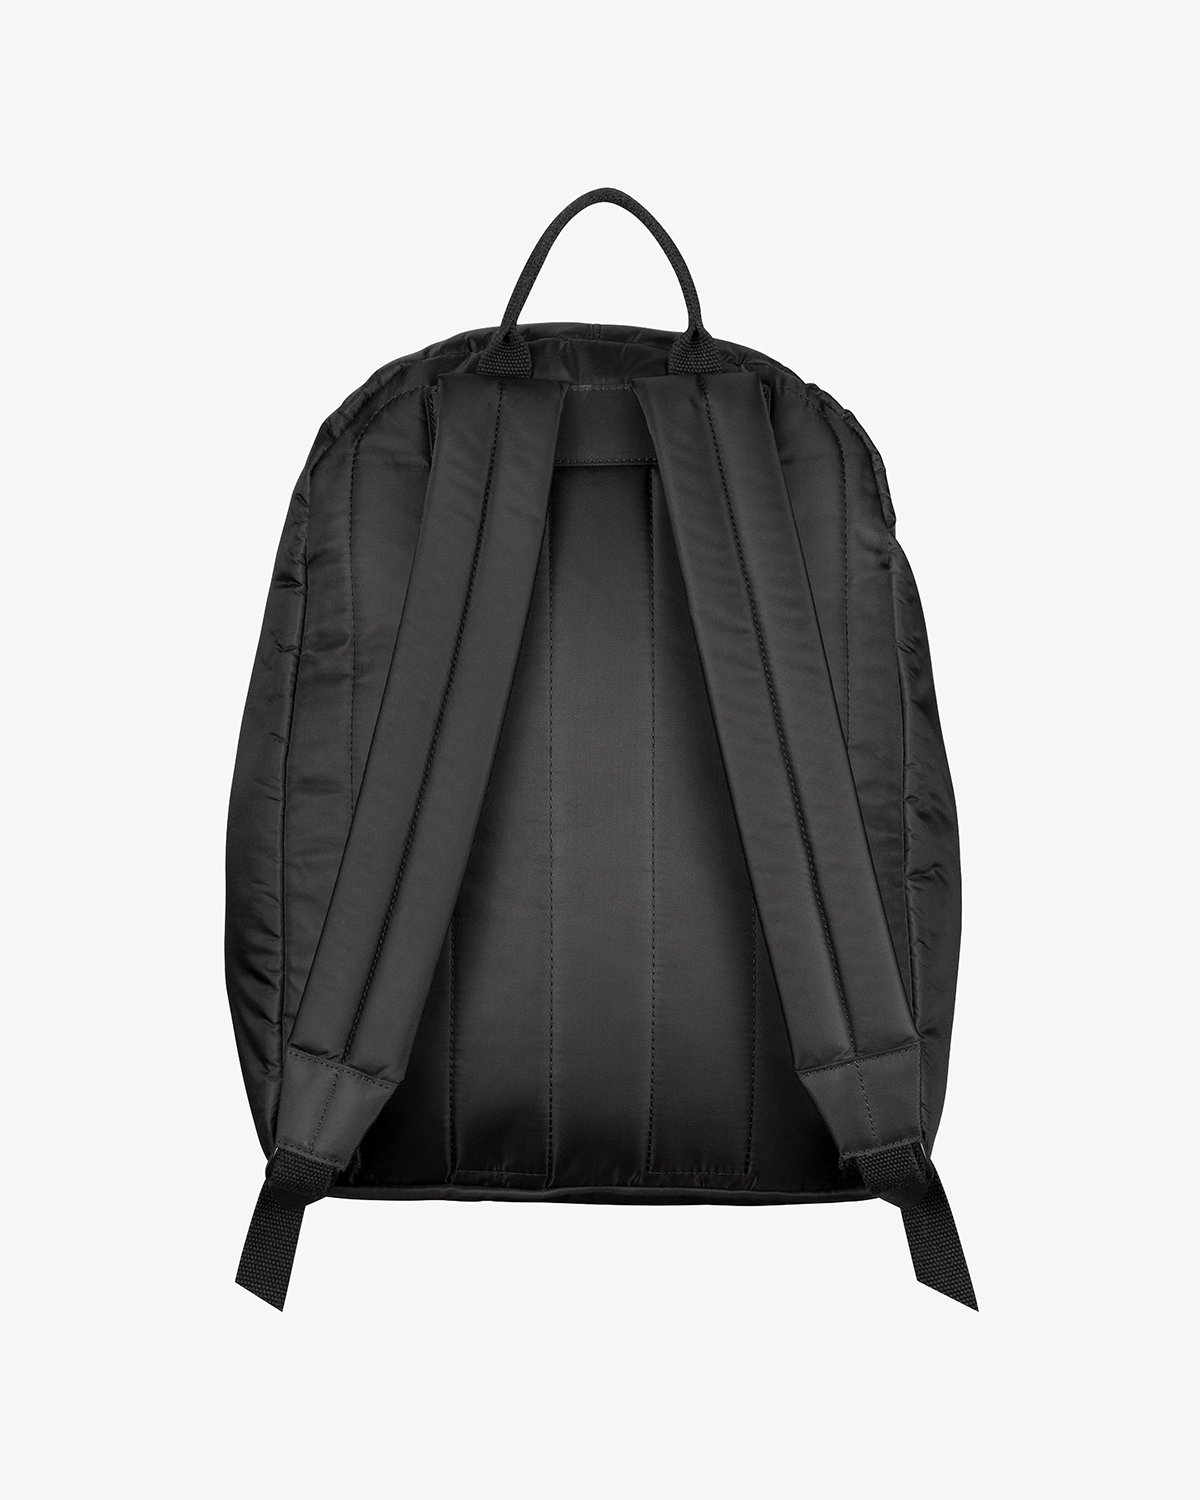 A.P.C. x JJJJound - Backpack Black - Accessories - Black - Image 3